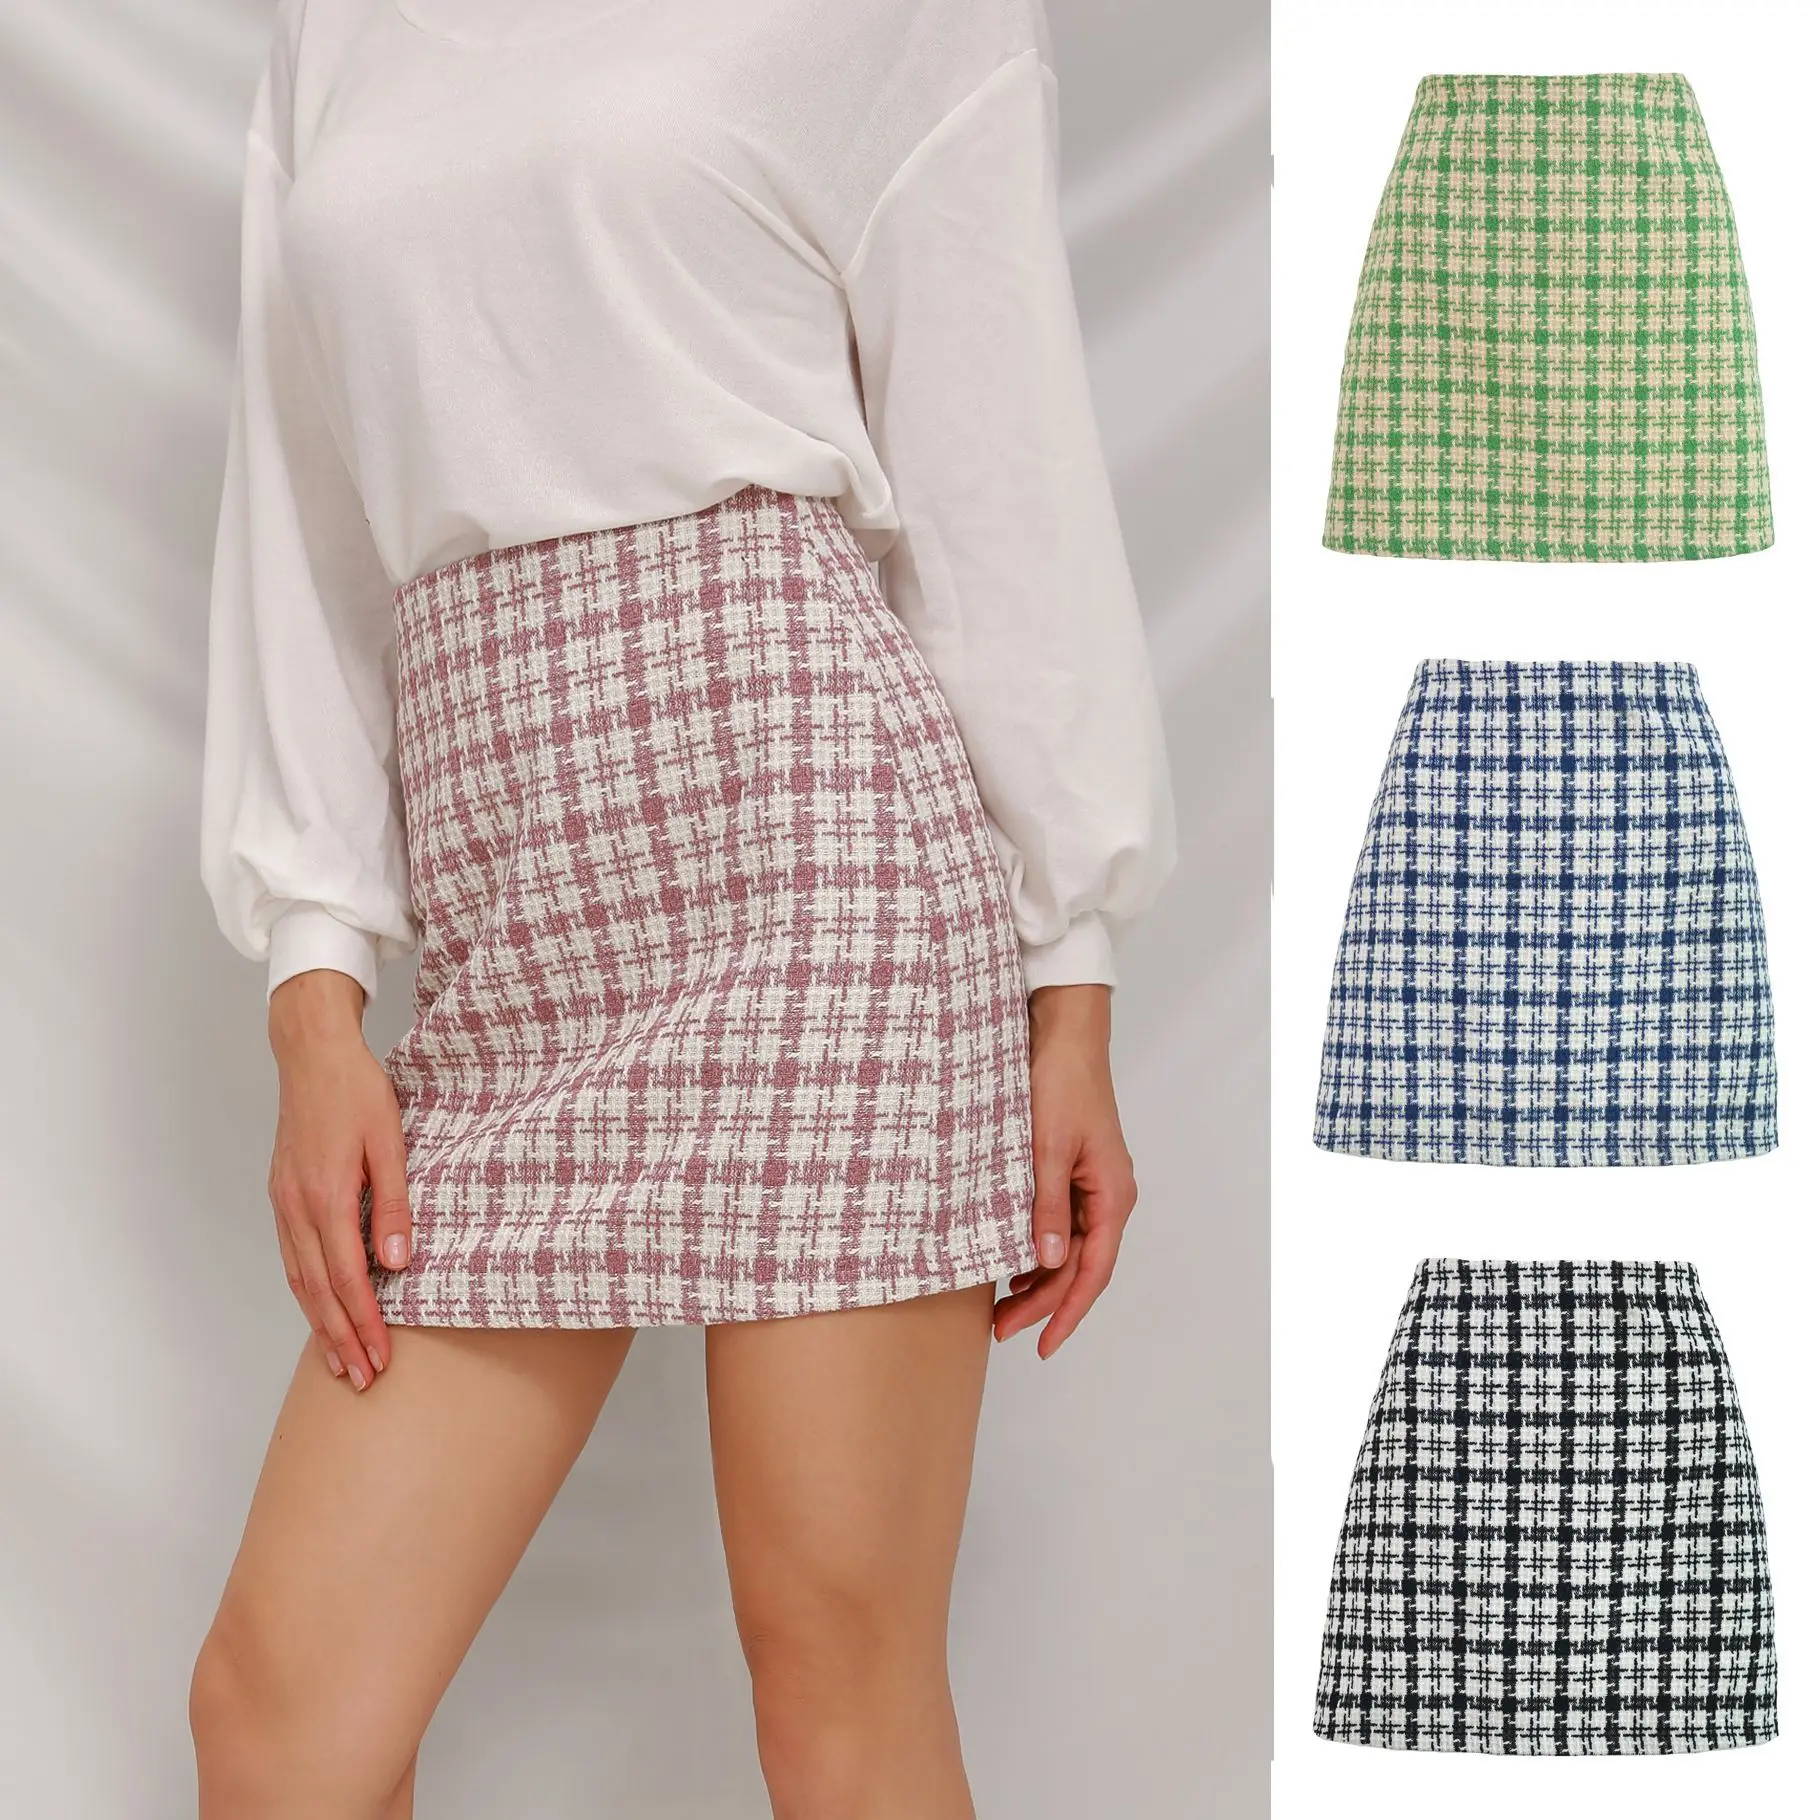 YingTang Women's Plaid Skirt High Waisted Pencil Mini Skirt